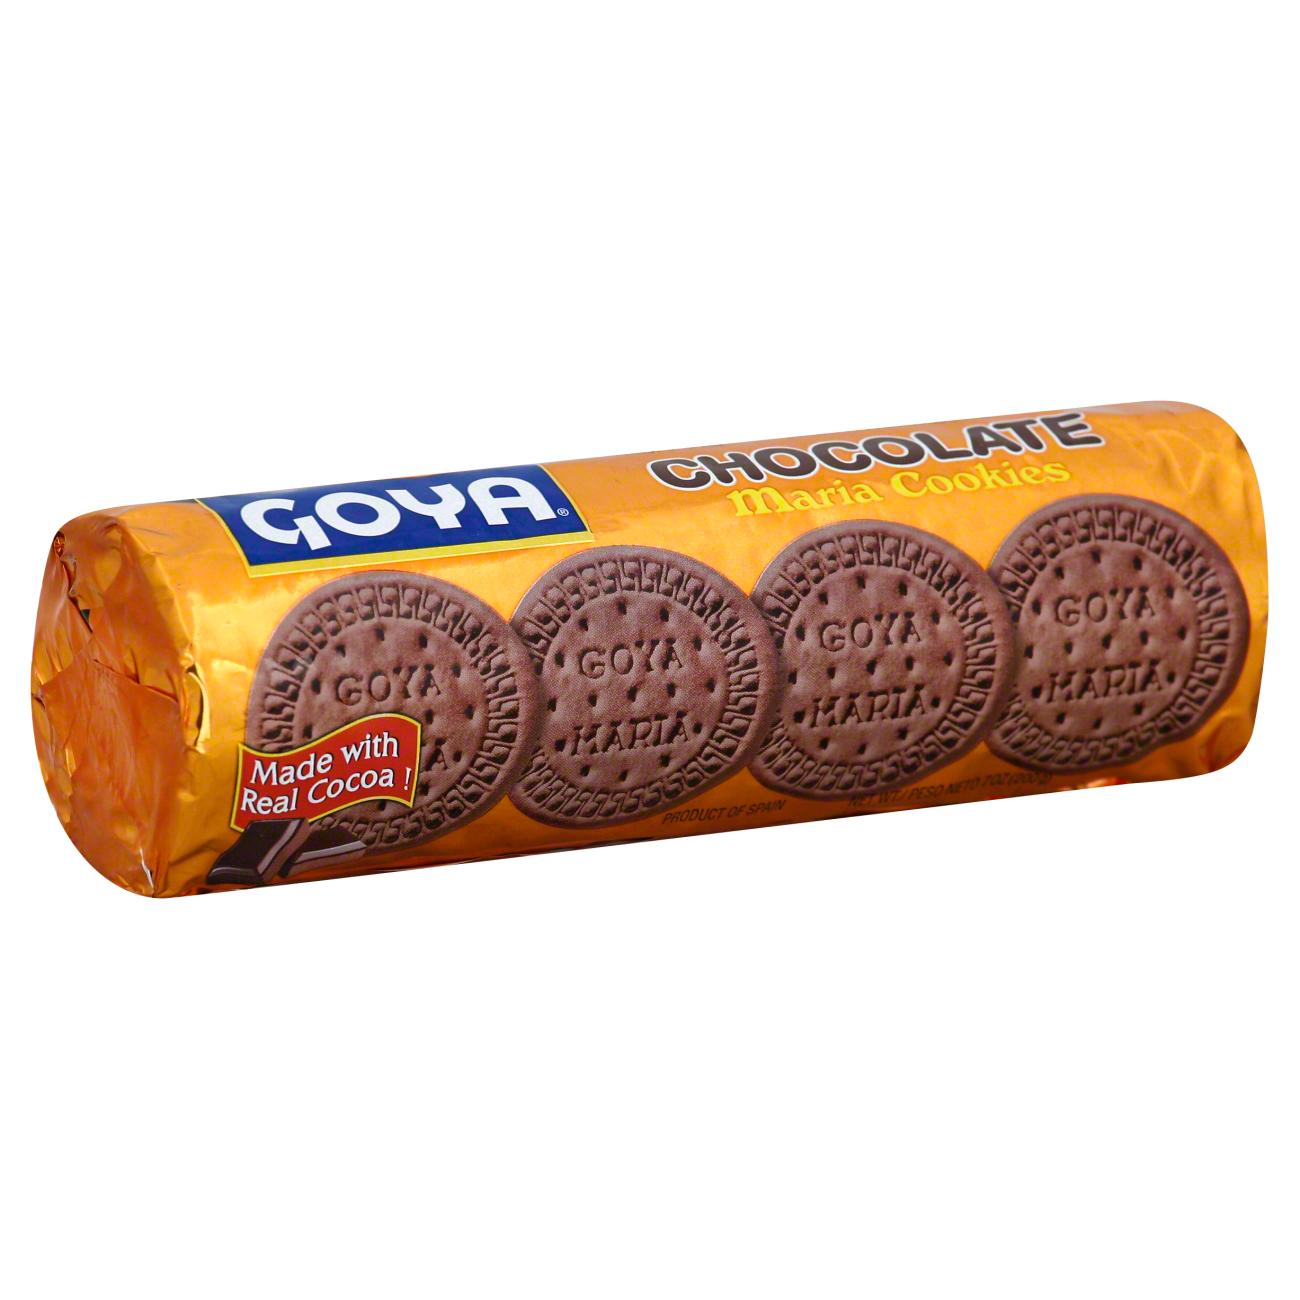 Goya Chocolate Maria Cookies; image 1 of 2